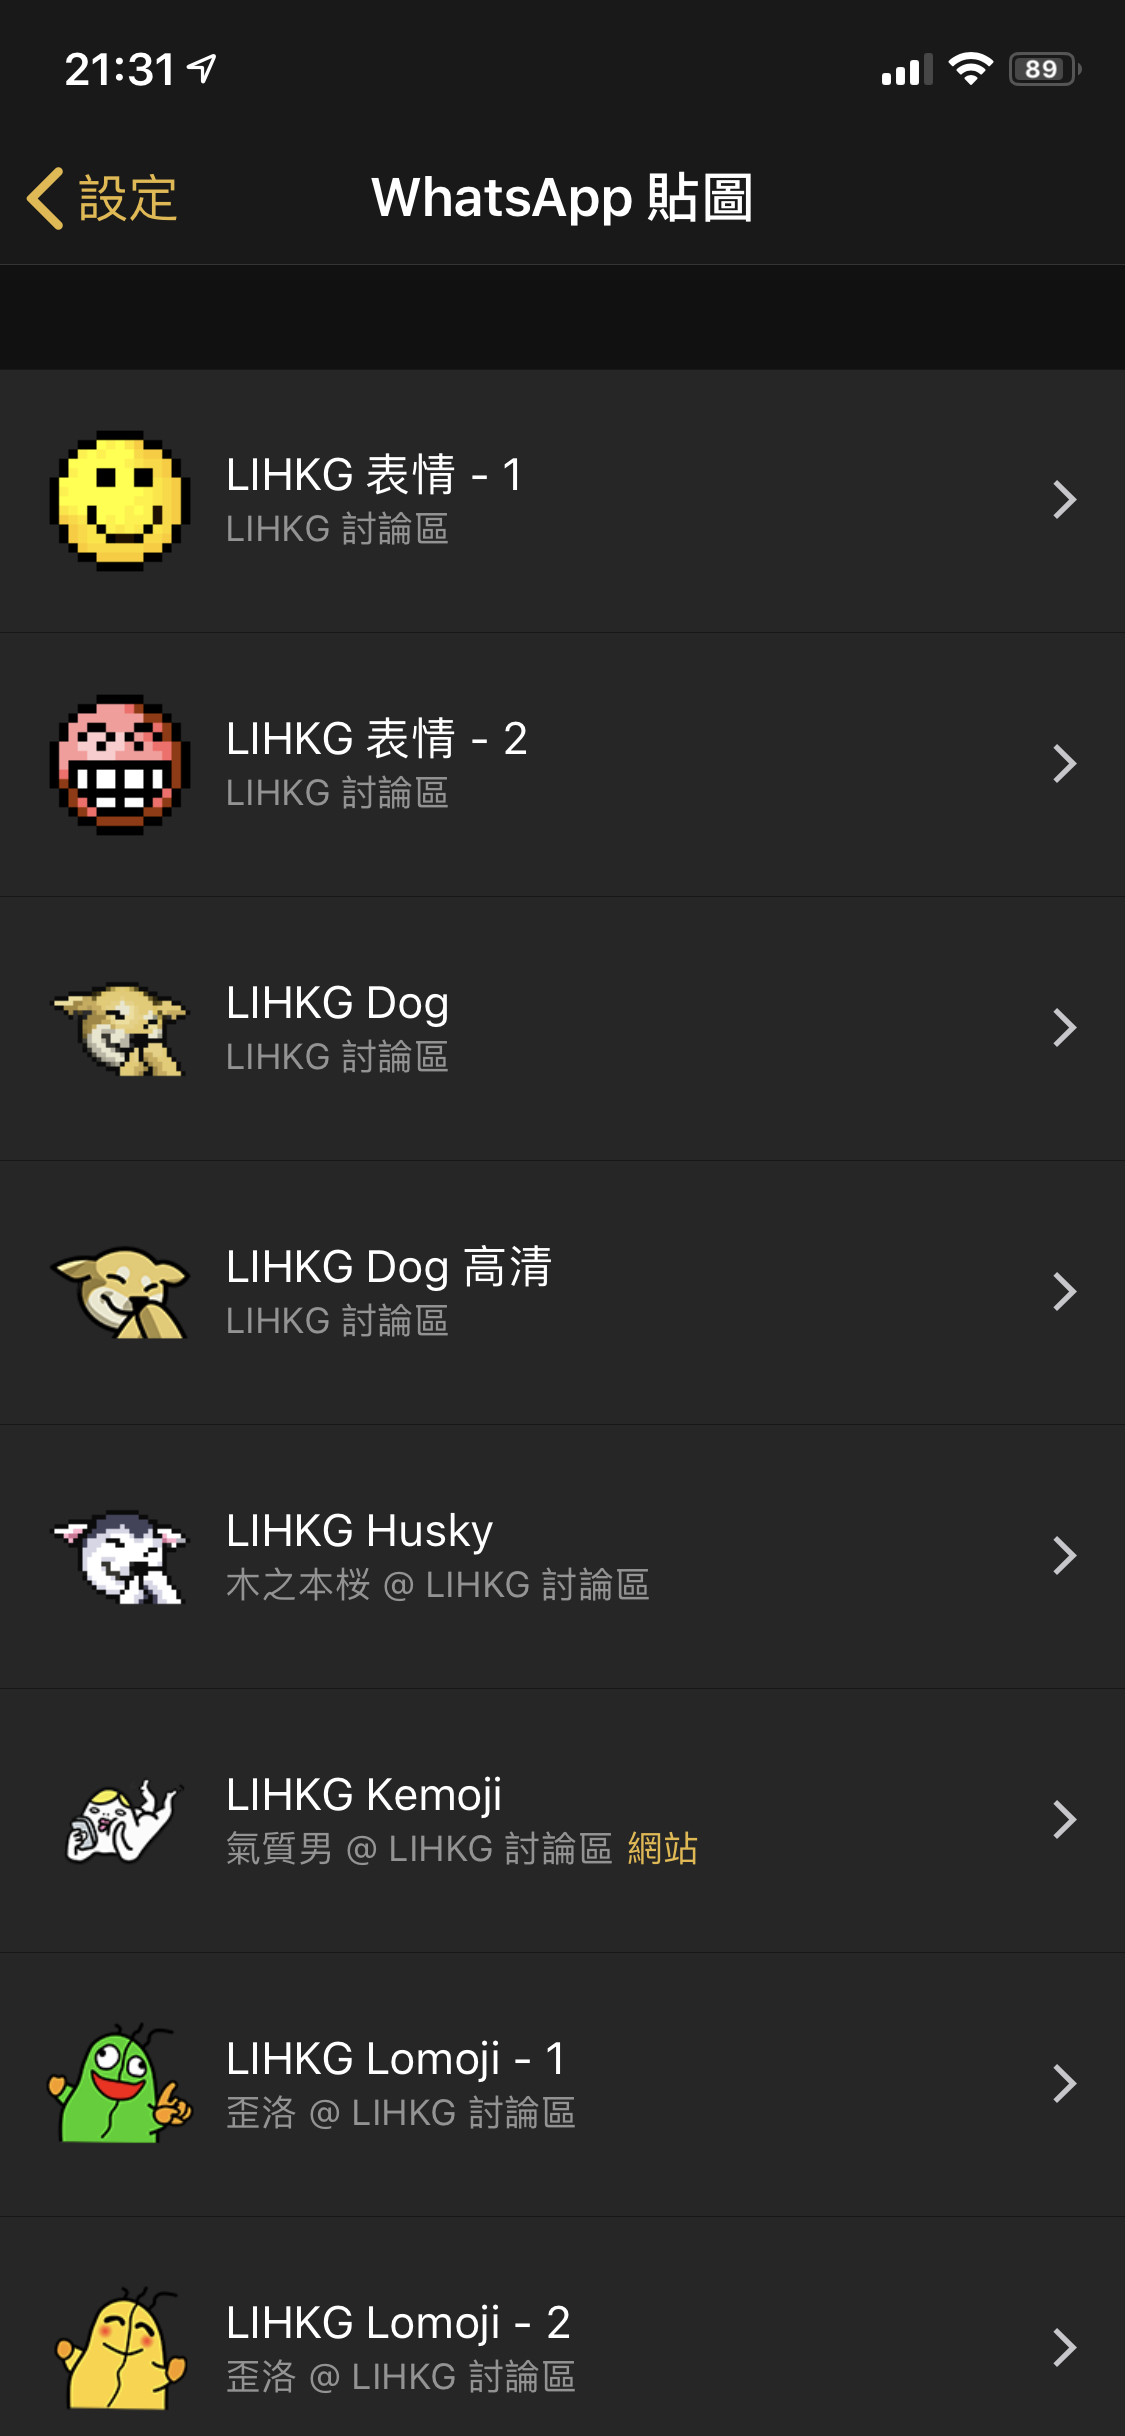 Lihkg Dog Whatsapp Sticker Lihkg